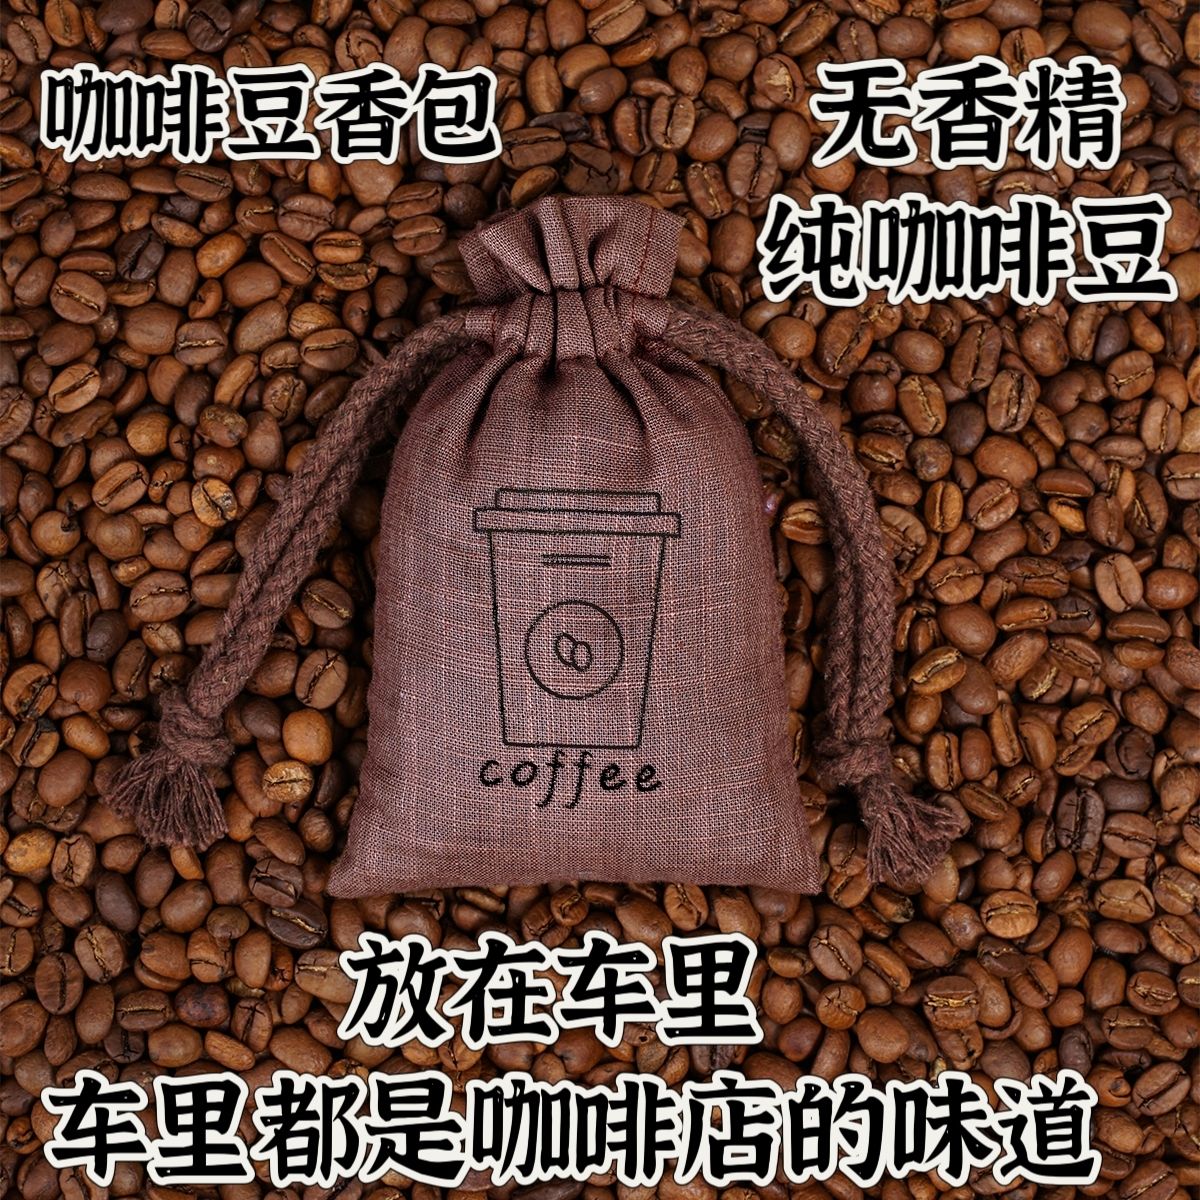 Car car coffee bean aromatherapy deodorant long-lasting aroma sachet sachet sachet coffee flavor car aromatherapy